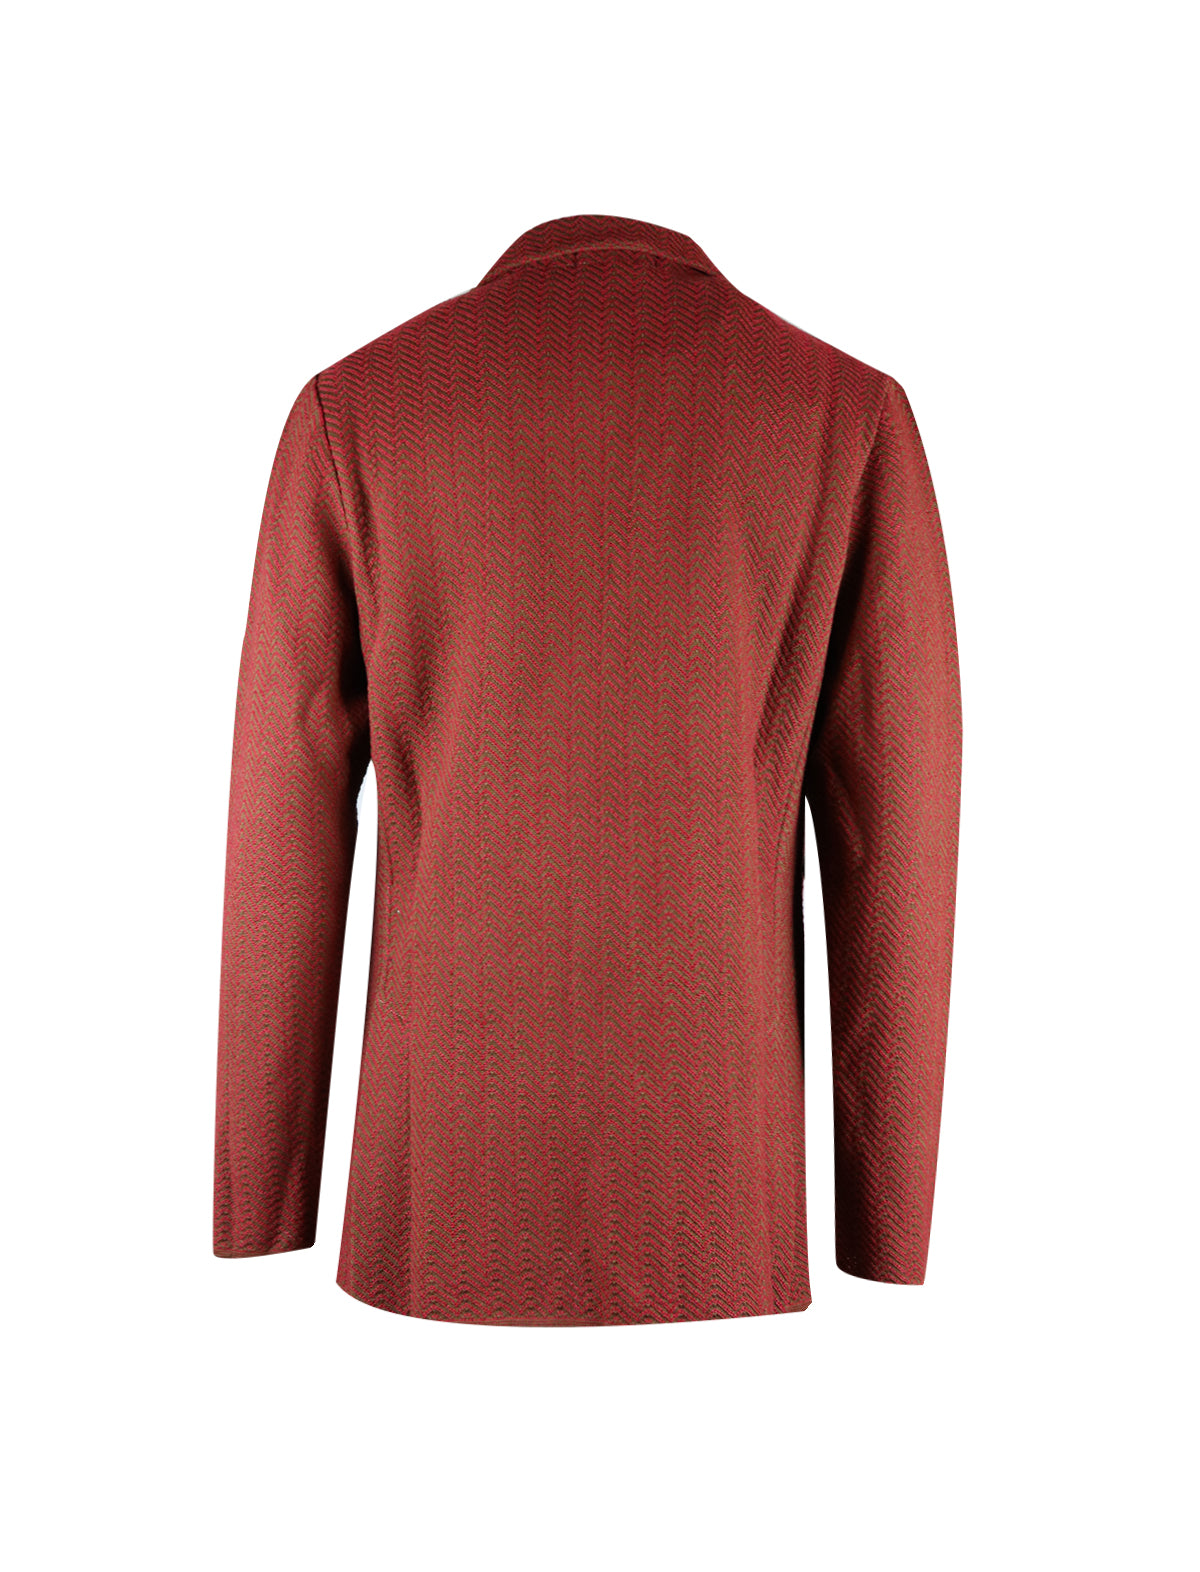 Lardini Single-Breasted Knitted Blazer in Red/Green Weave